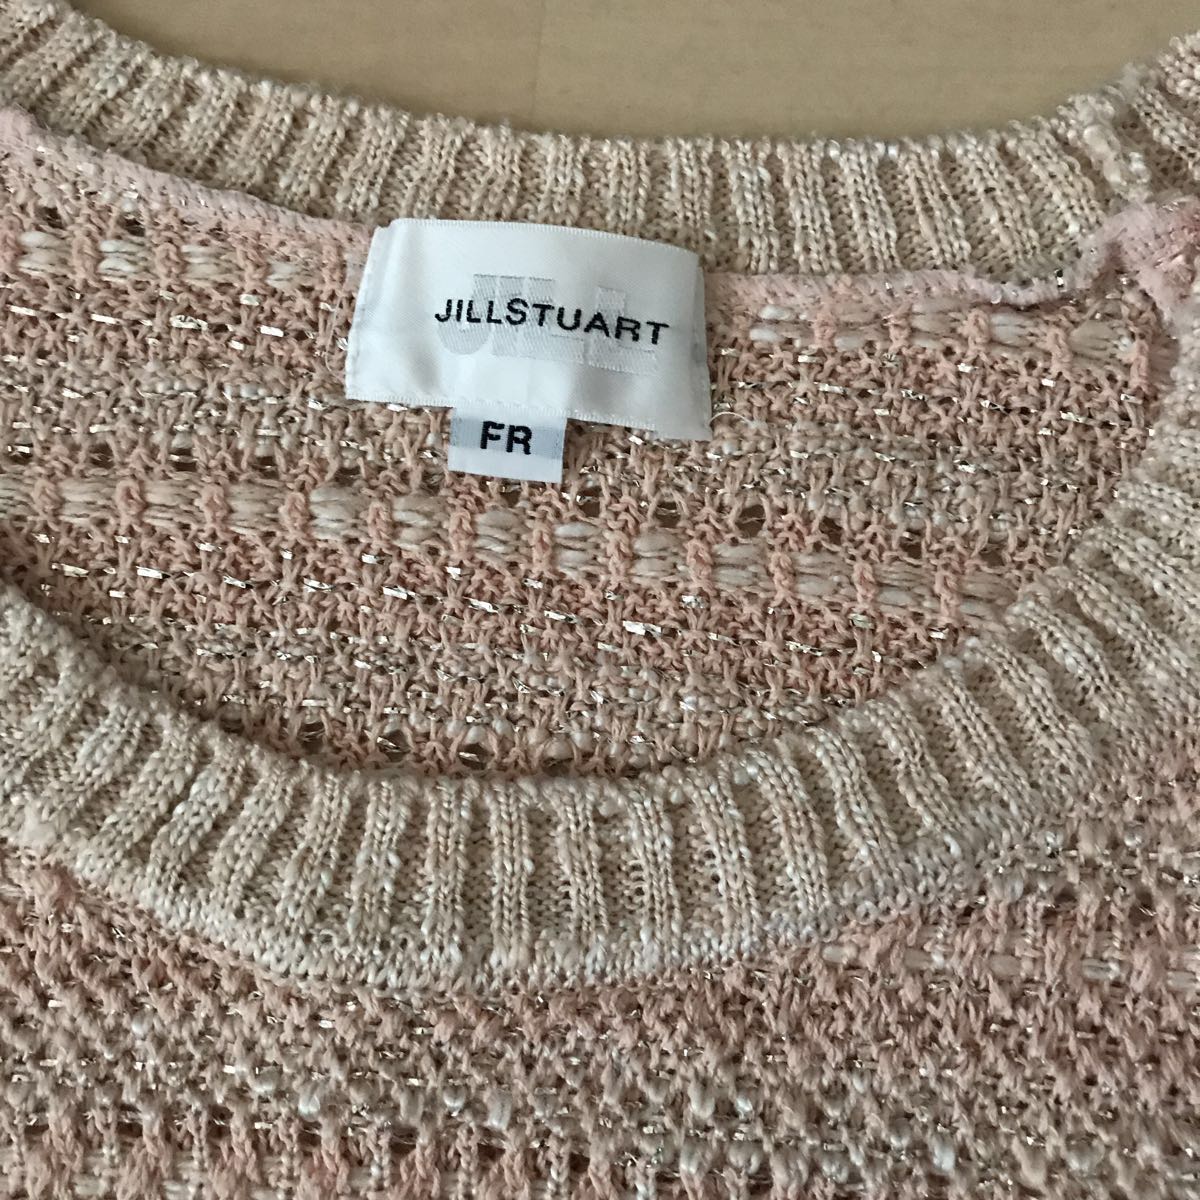  Jill Stuart JILLSTUART FR размер джемпер с коротким рукавом свитер короткий рукав розовый .... Kirakira лен . сделано в Японии снижение цены 